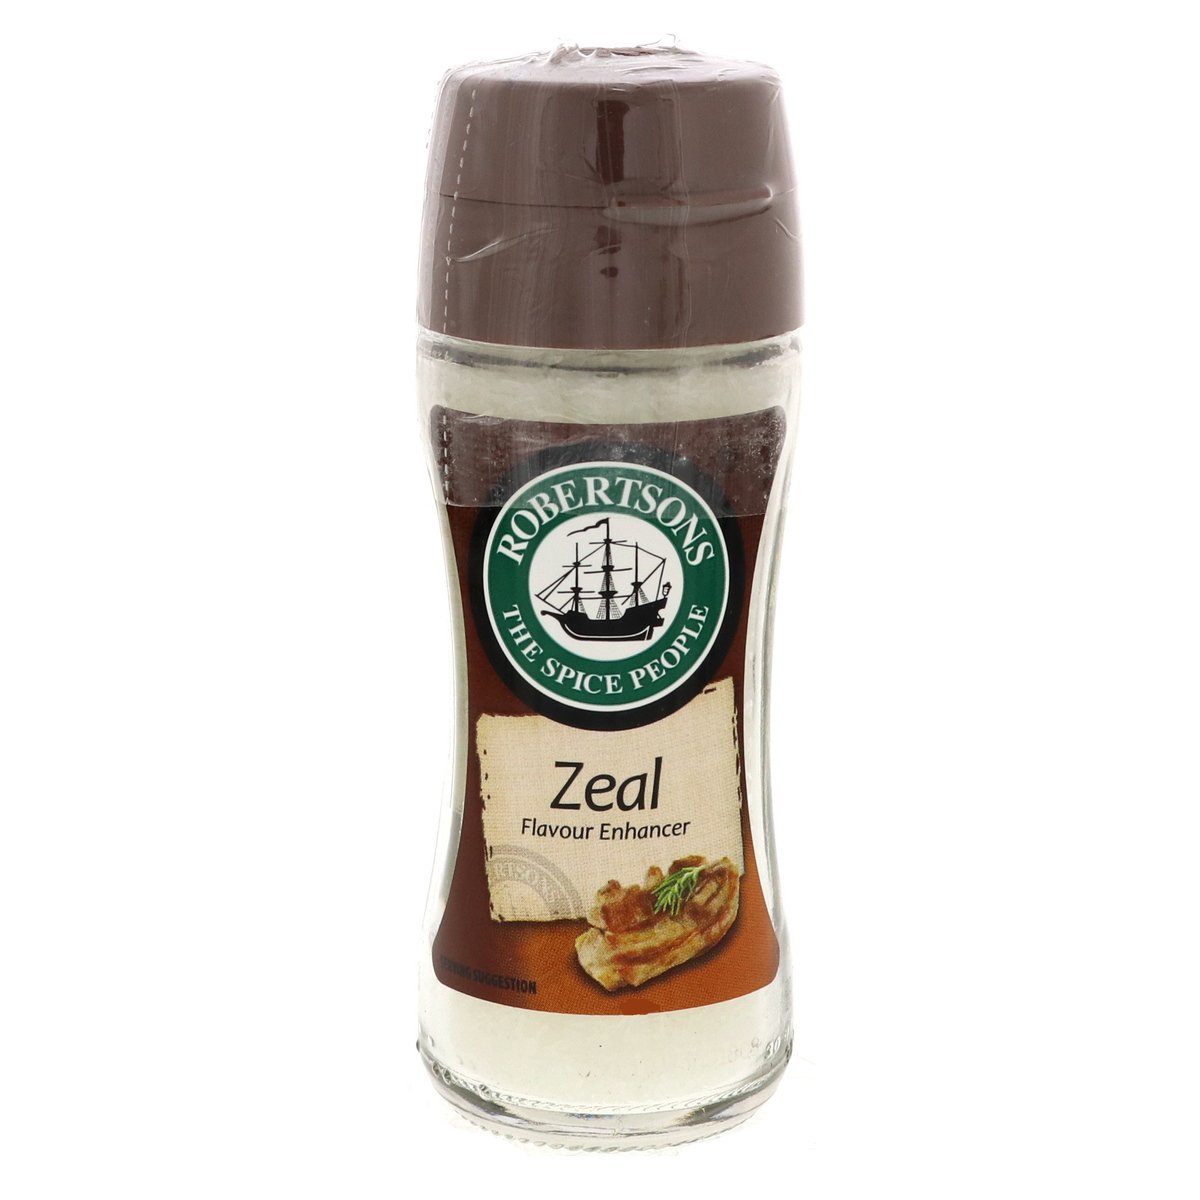 Robertsons Zeal Flavour Enhancer 100 ml